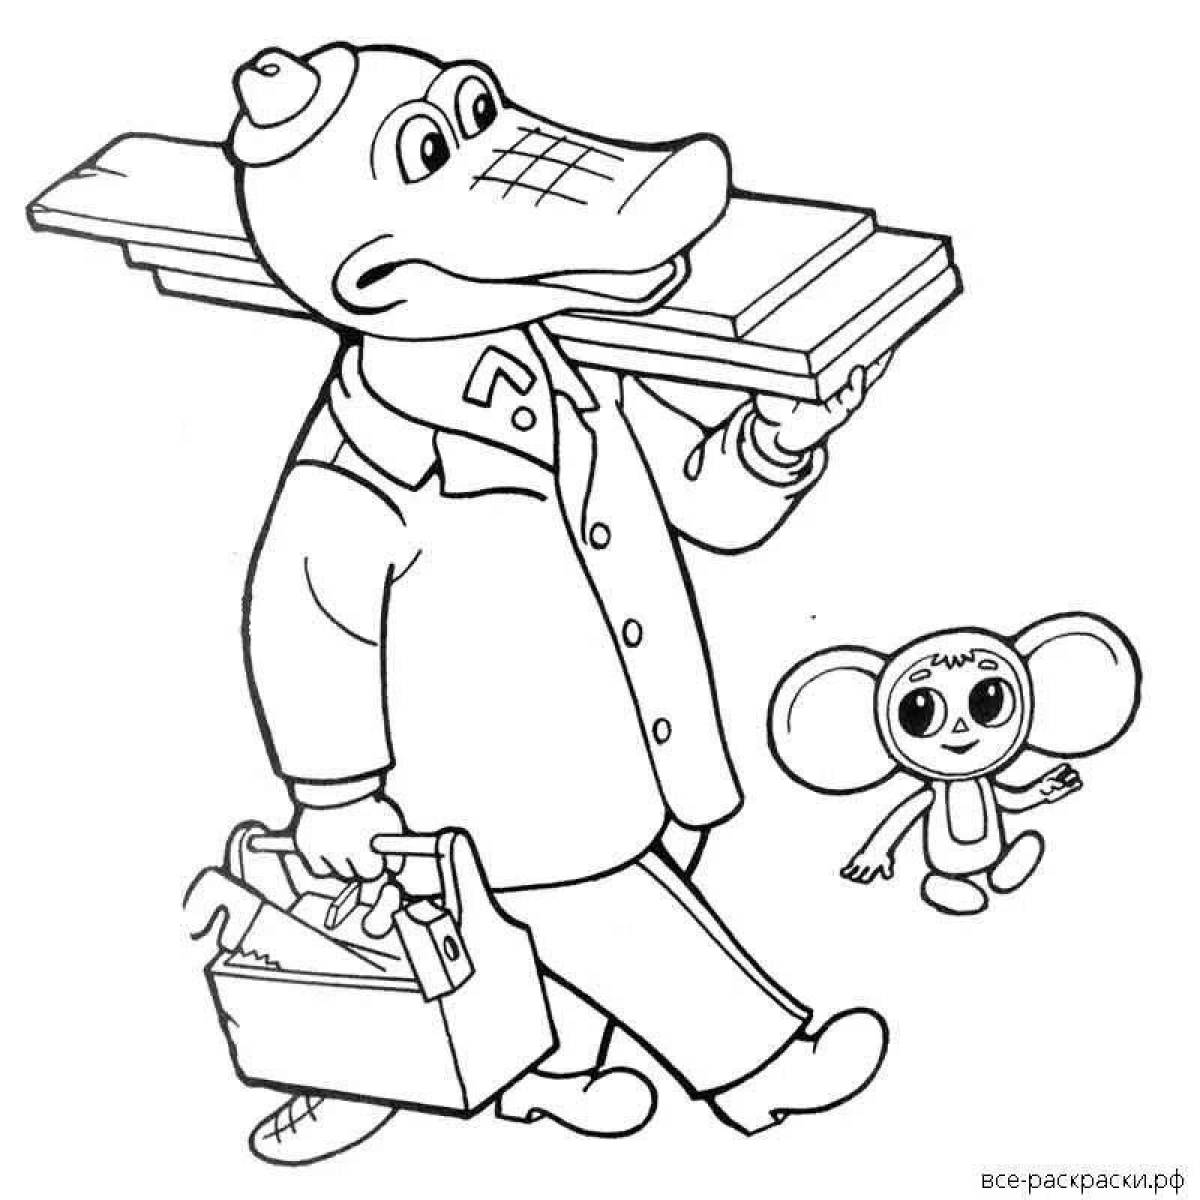 Fascinating Cheburashka coloring book for preschoolers